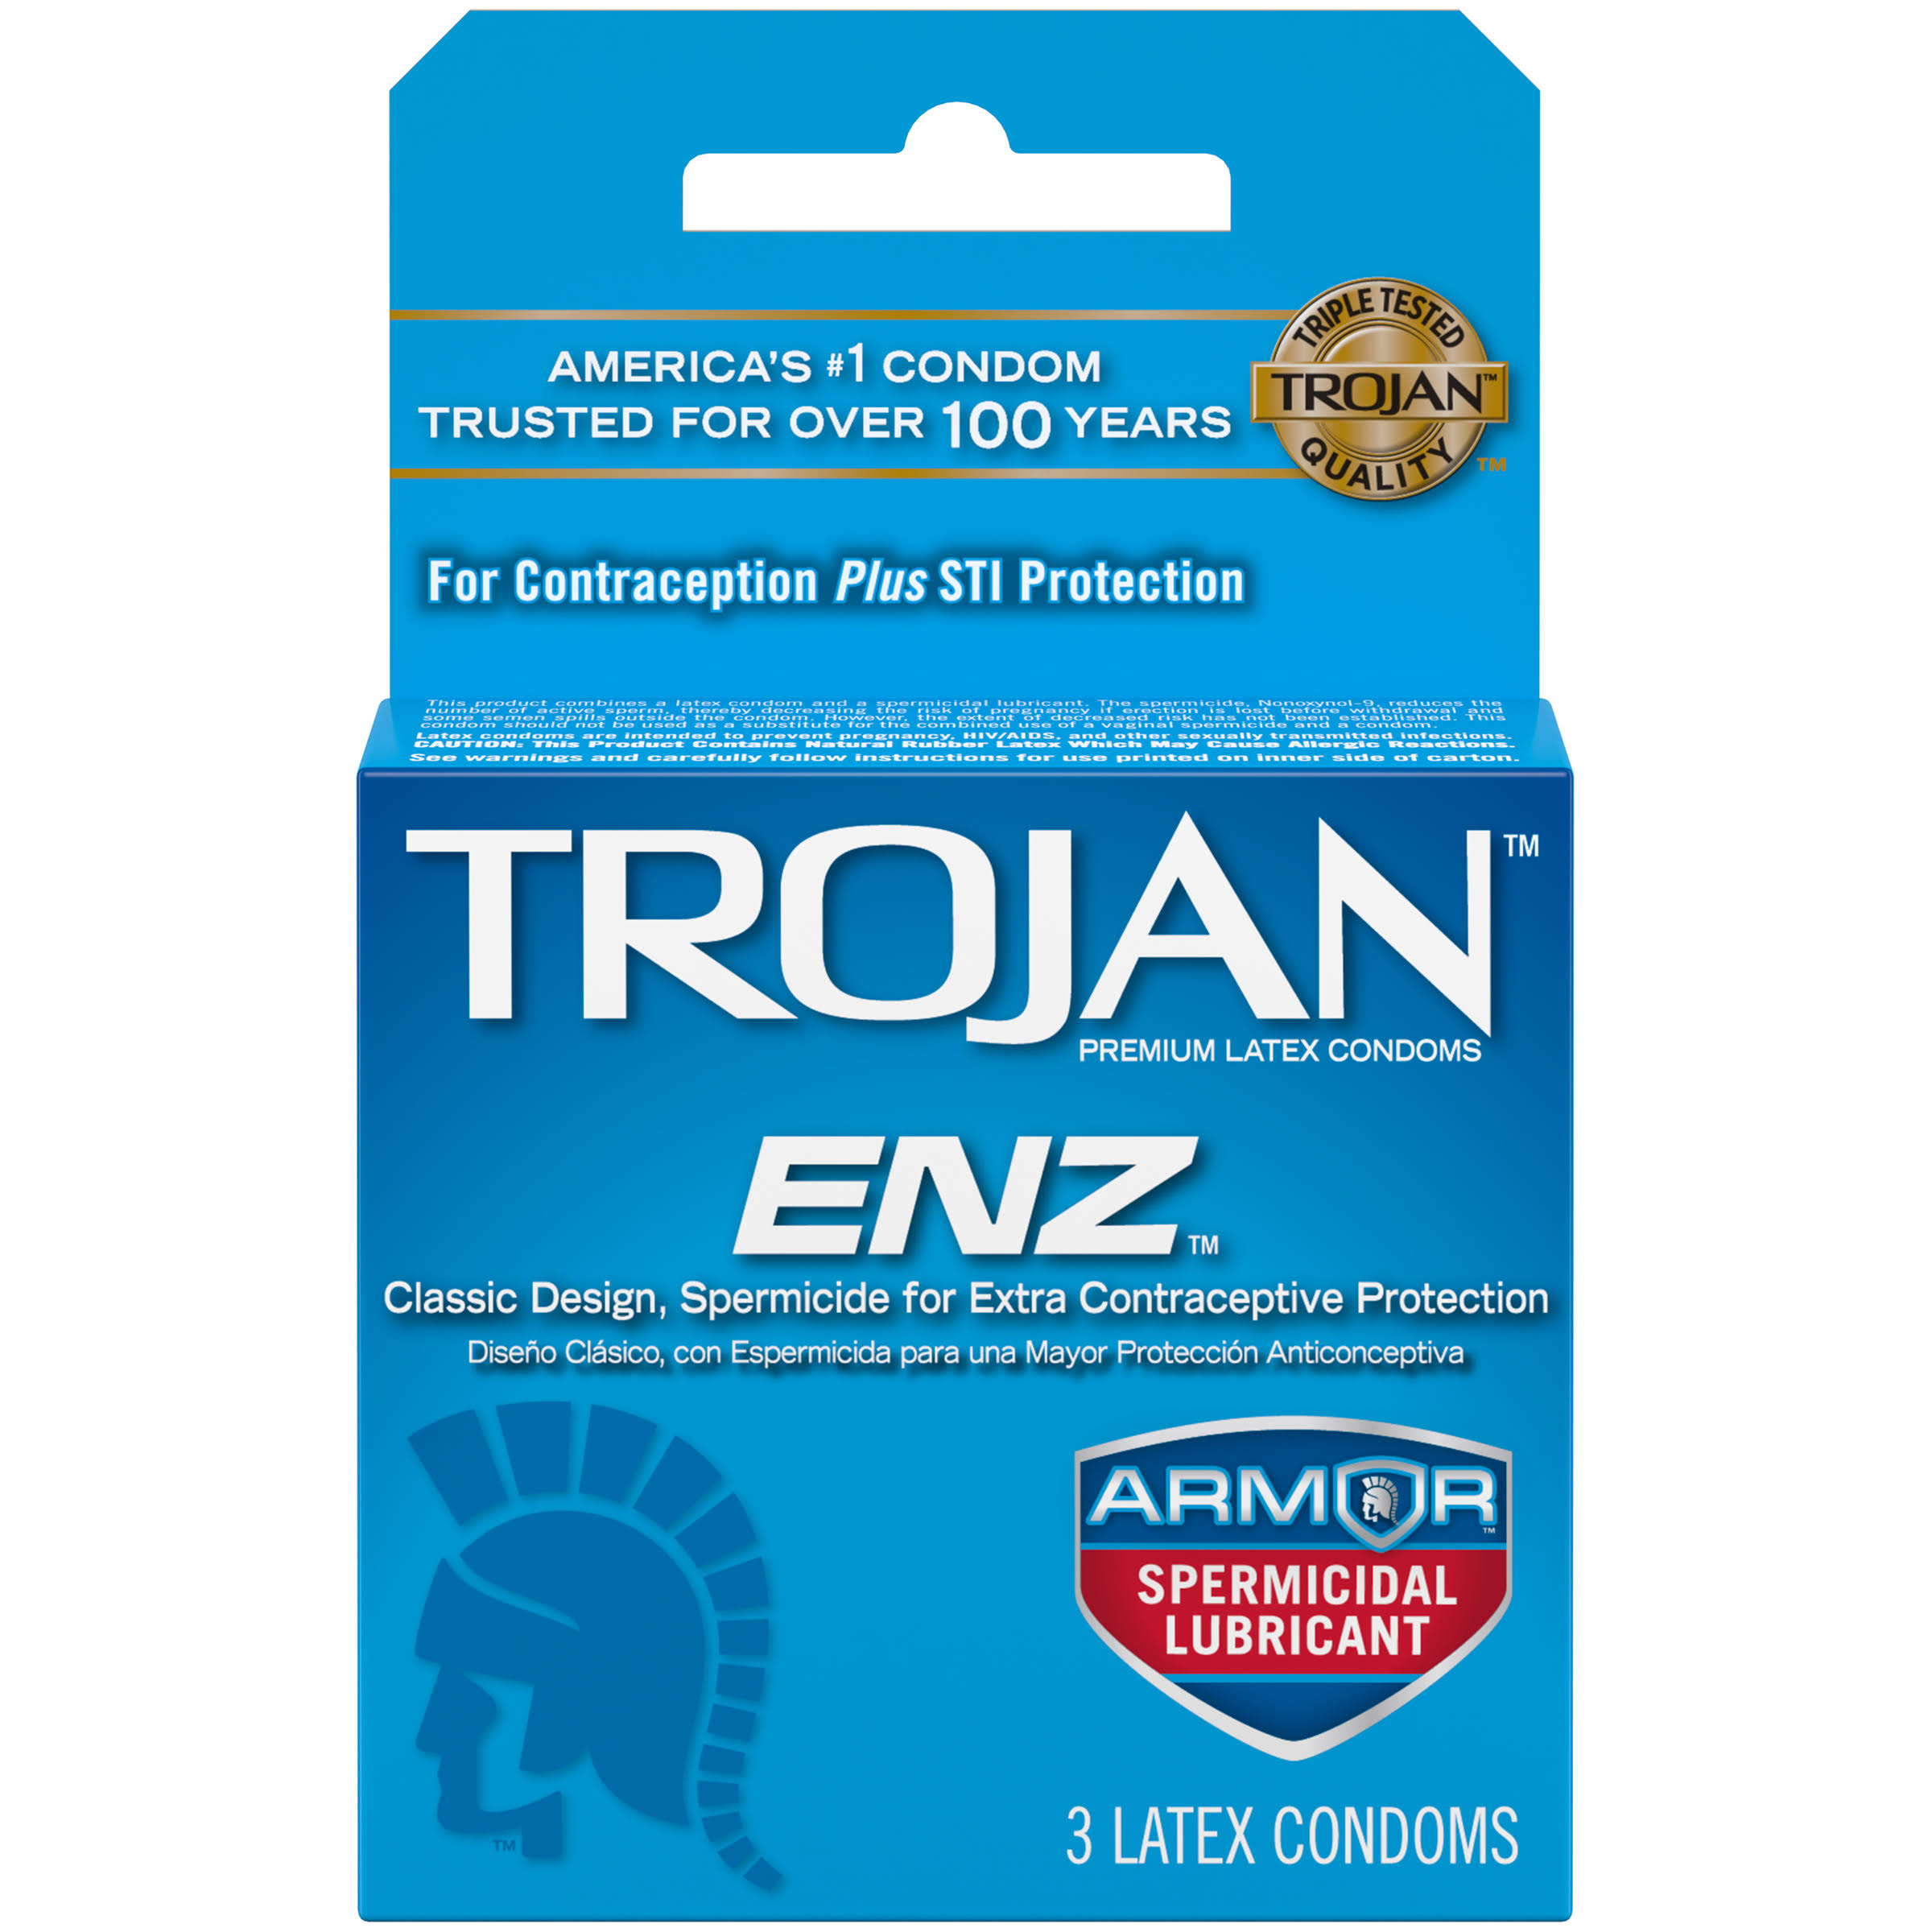 Trojan Armor Spermicidal Lubricant Condoms